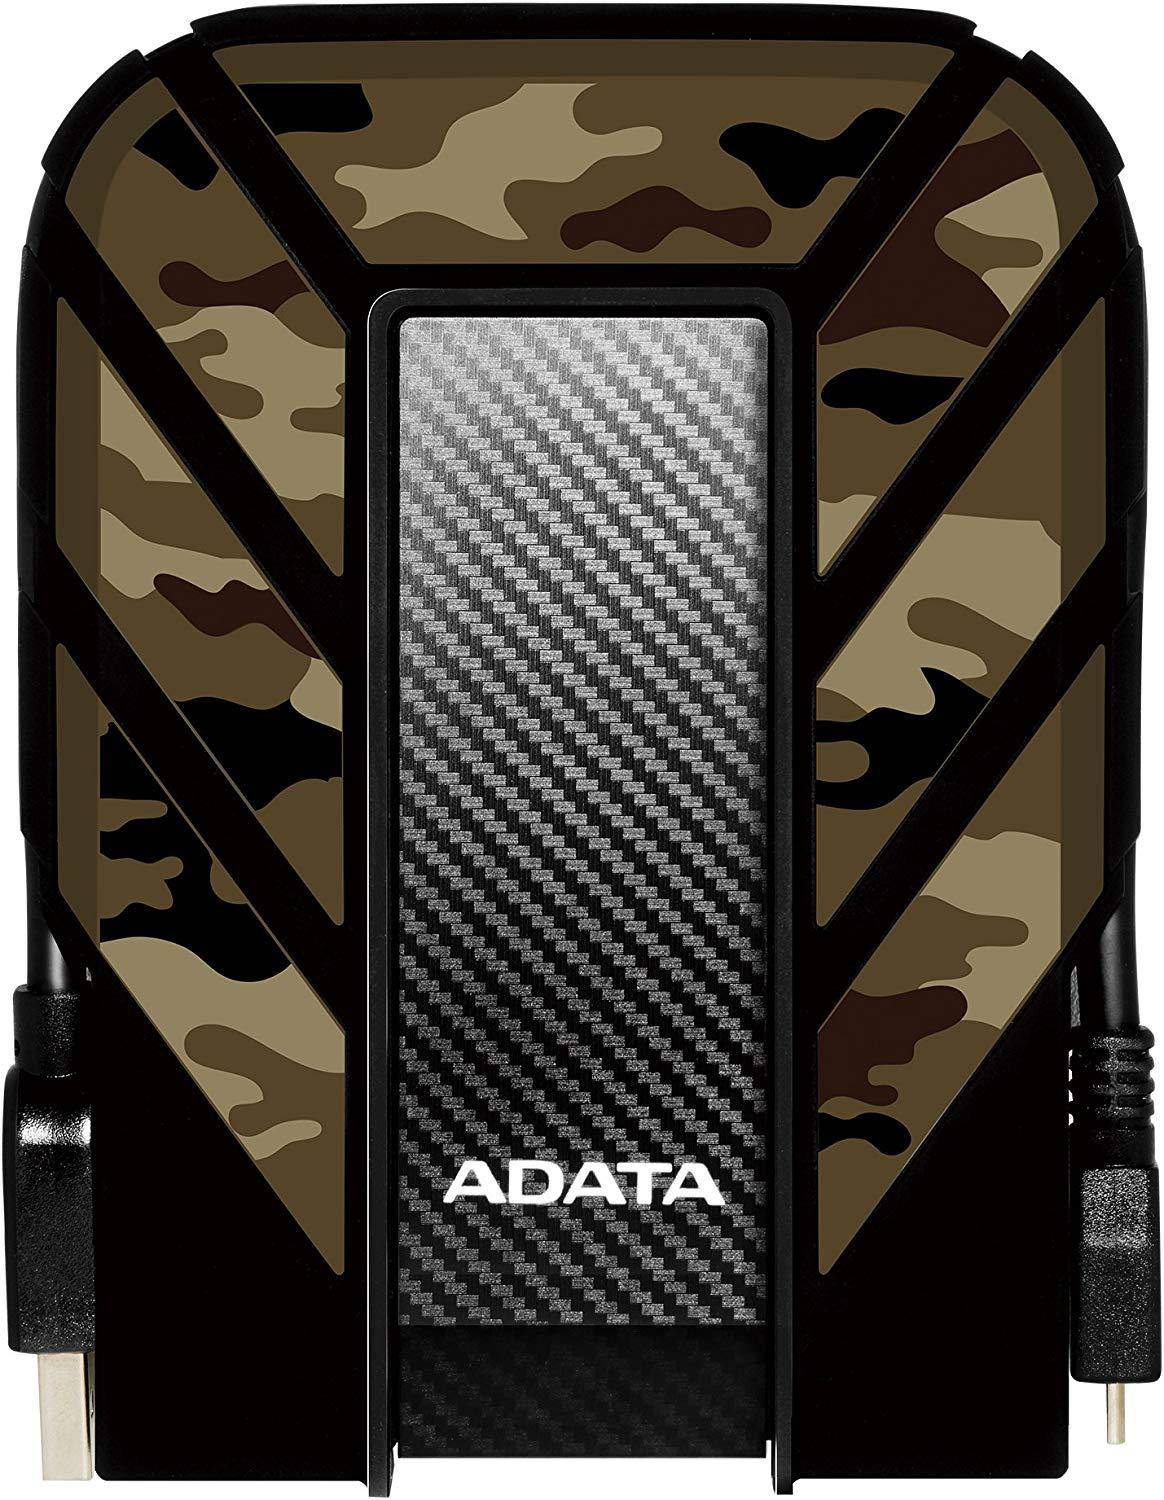 ADATA HD710M Pro 2TB Military Shockproof External Hard Drive zoom image